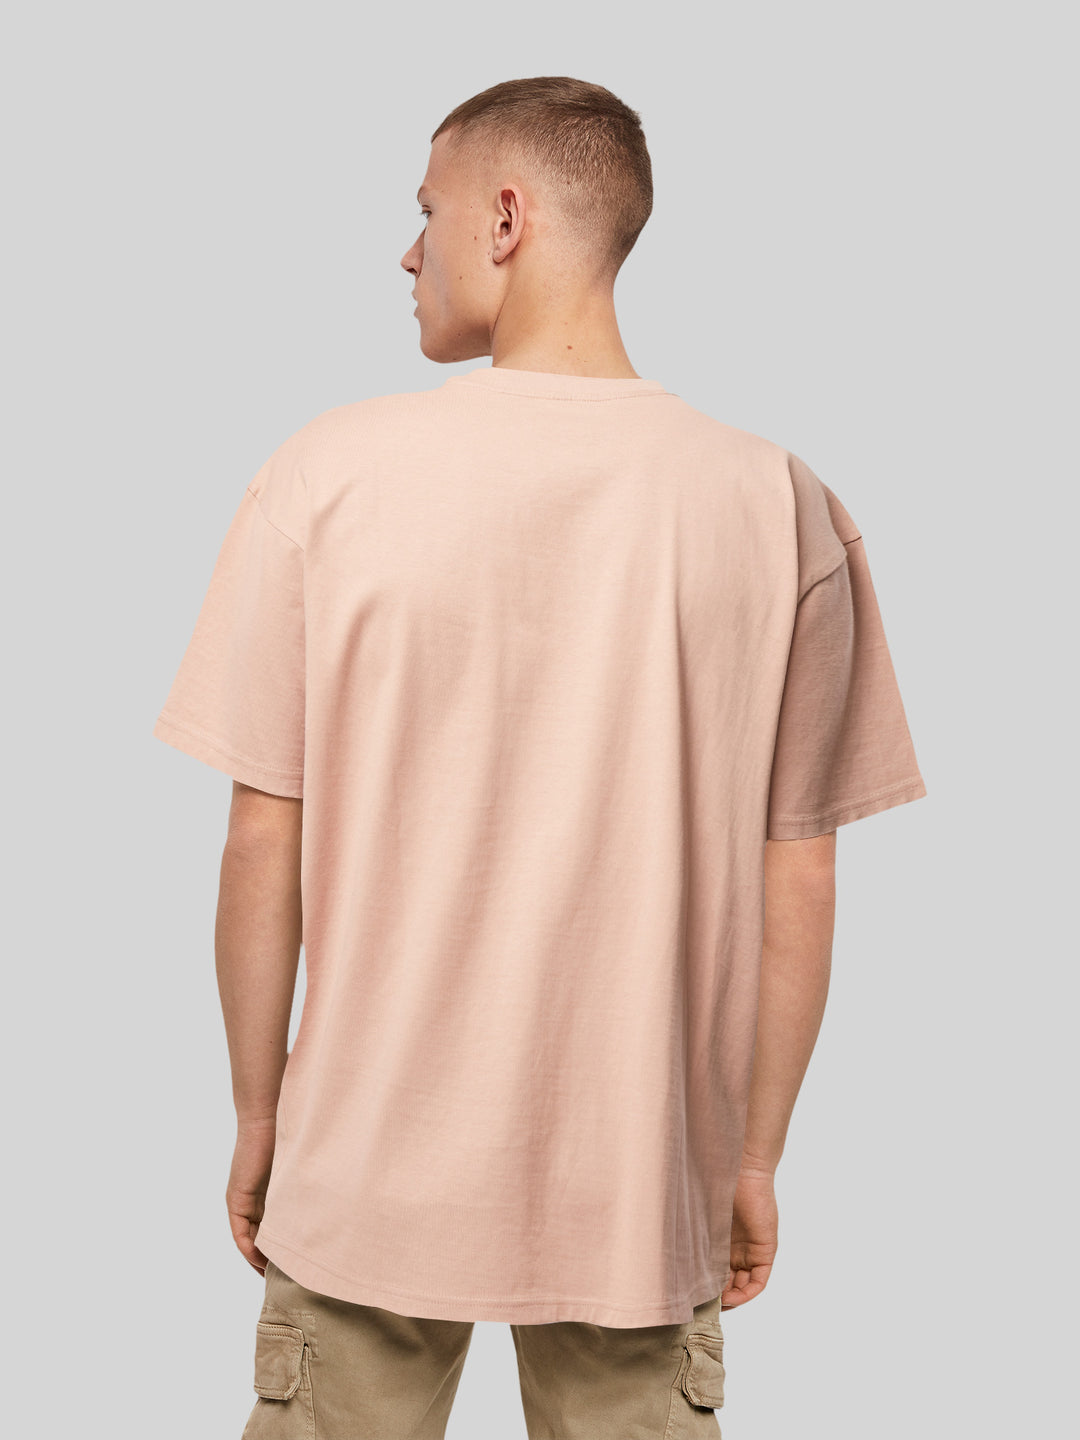 KNUT | Oversize T-Shirt Herren Seglerfahnen